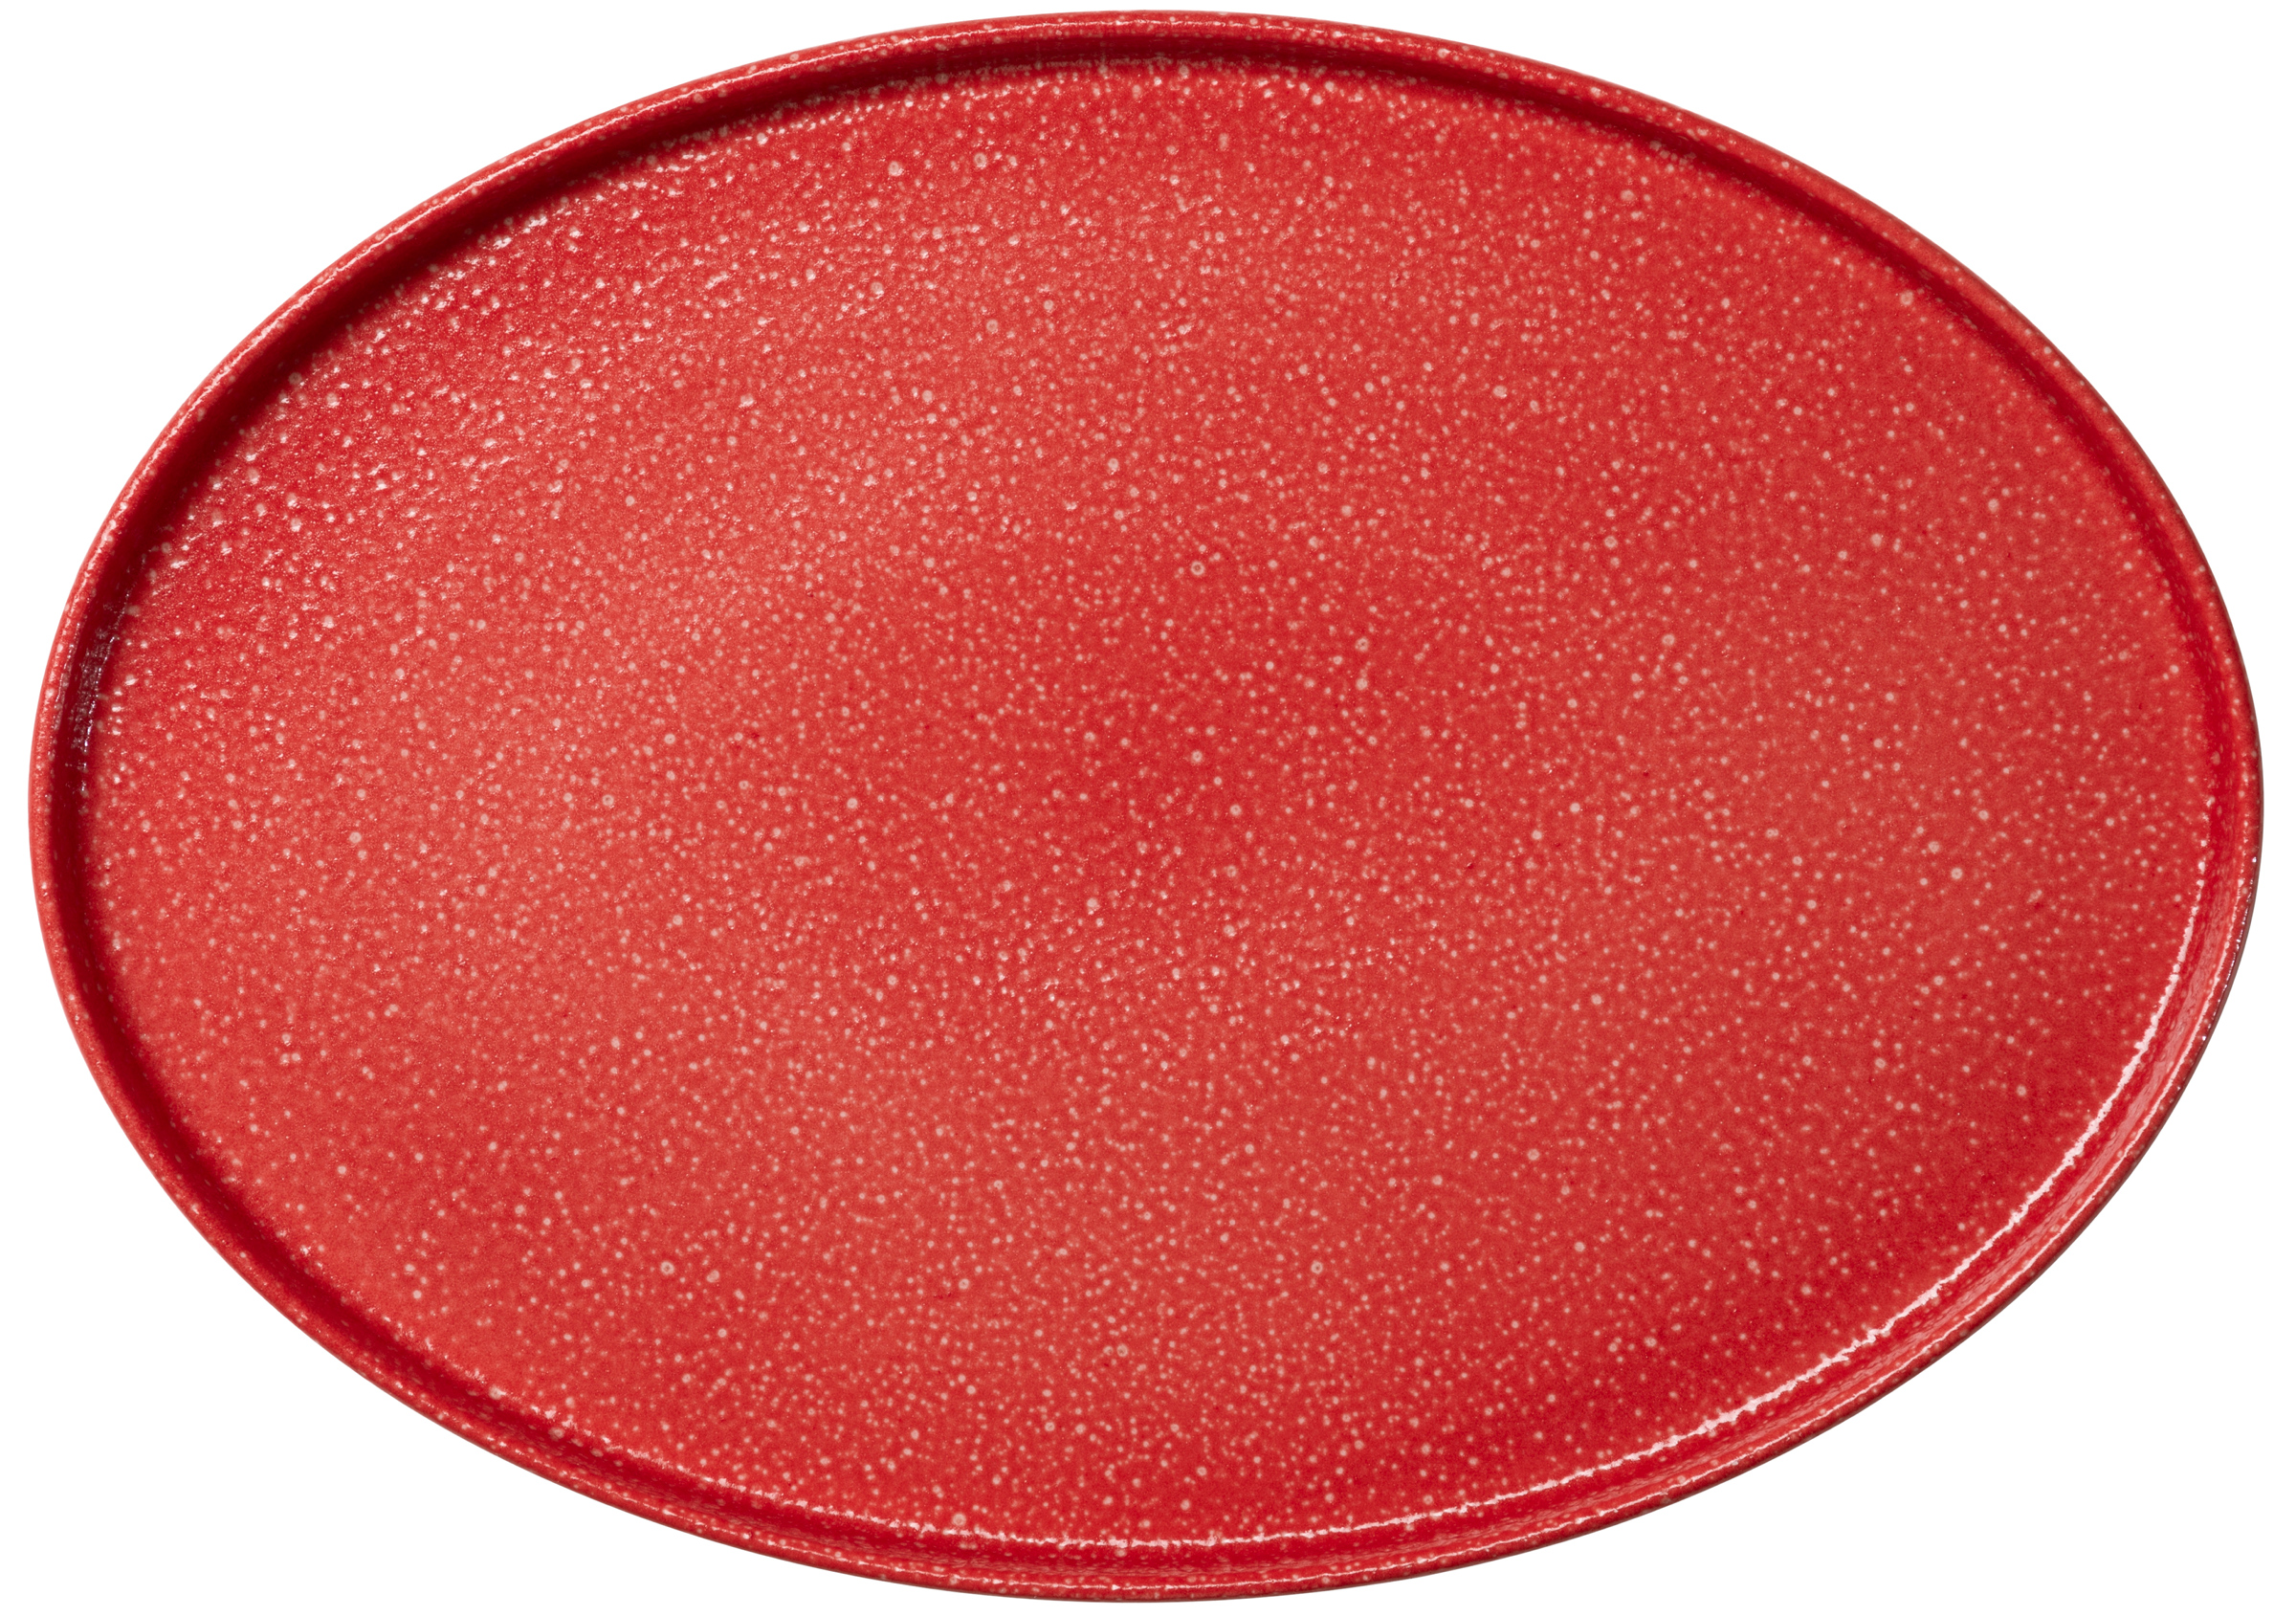 Teller flach oval 36x26cm GOOD MOOD intense red